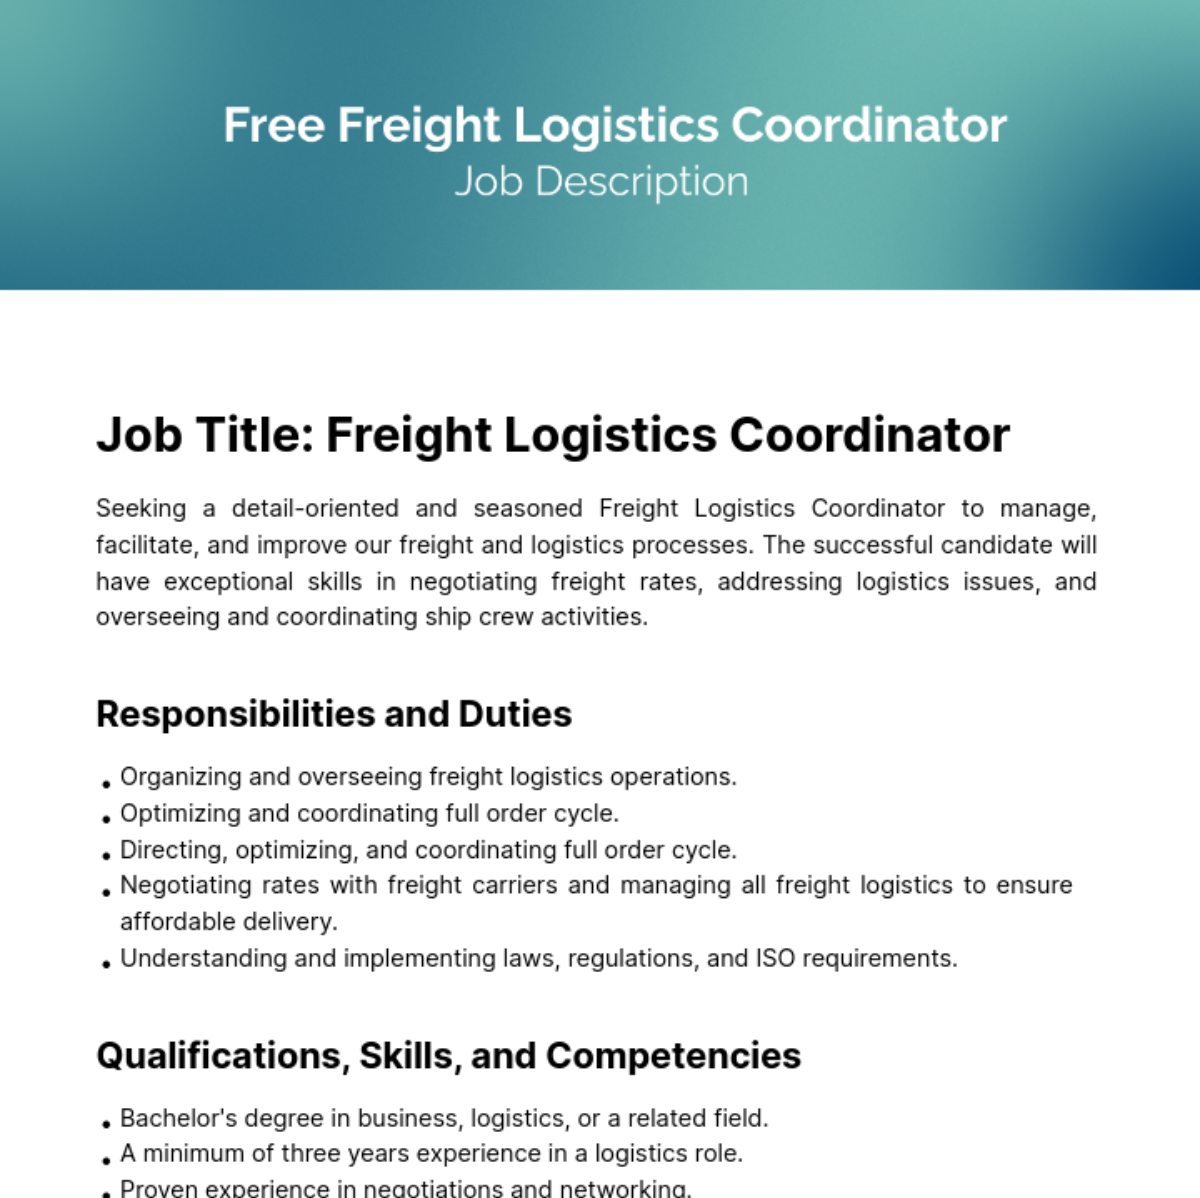 Freight Logistics Coordinator Job Description Template